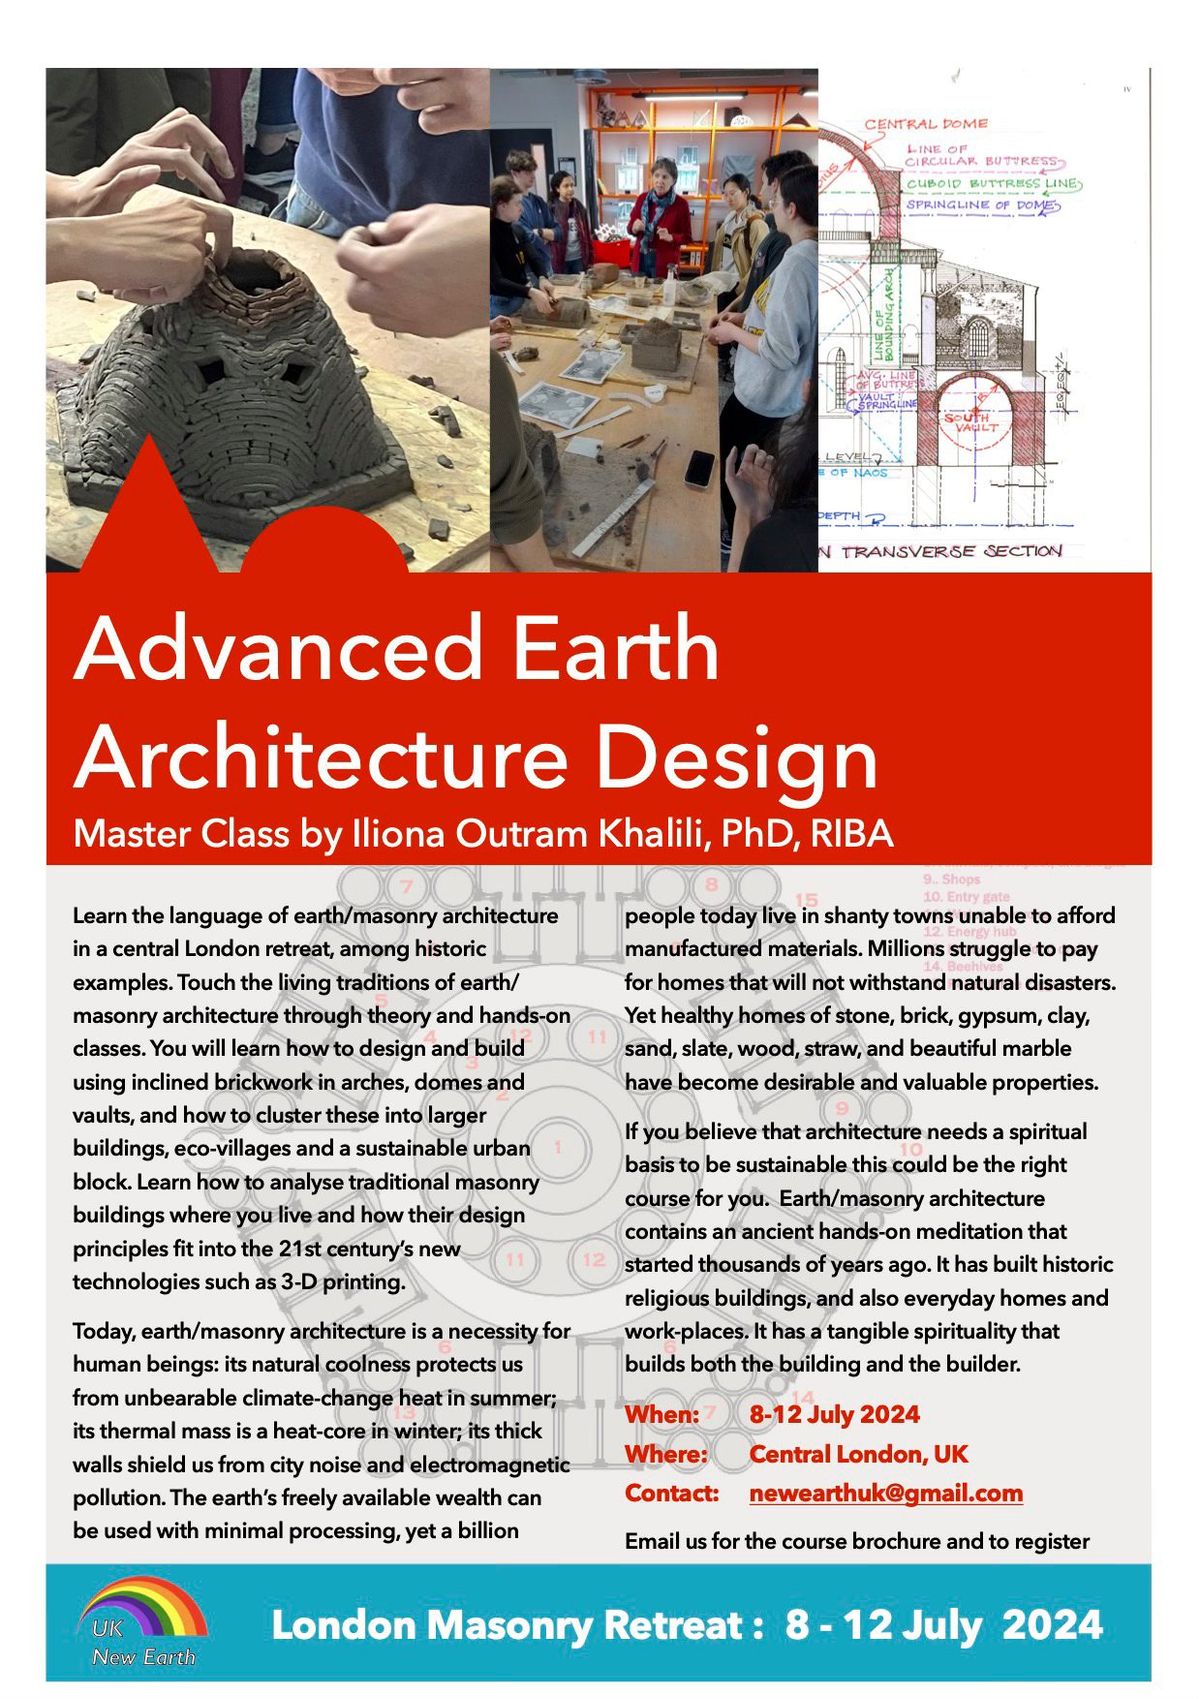 Advanced Earth Architecture Design: London Masonry Retreat